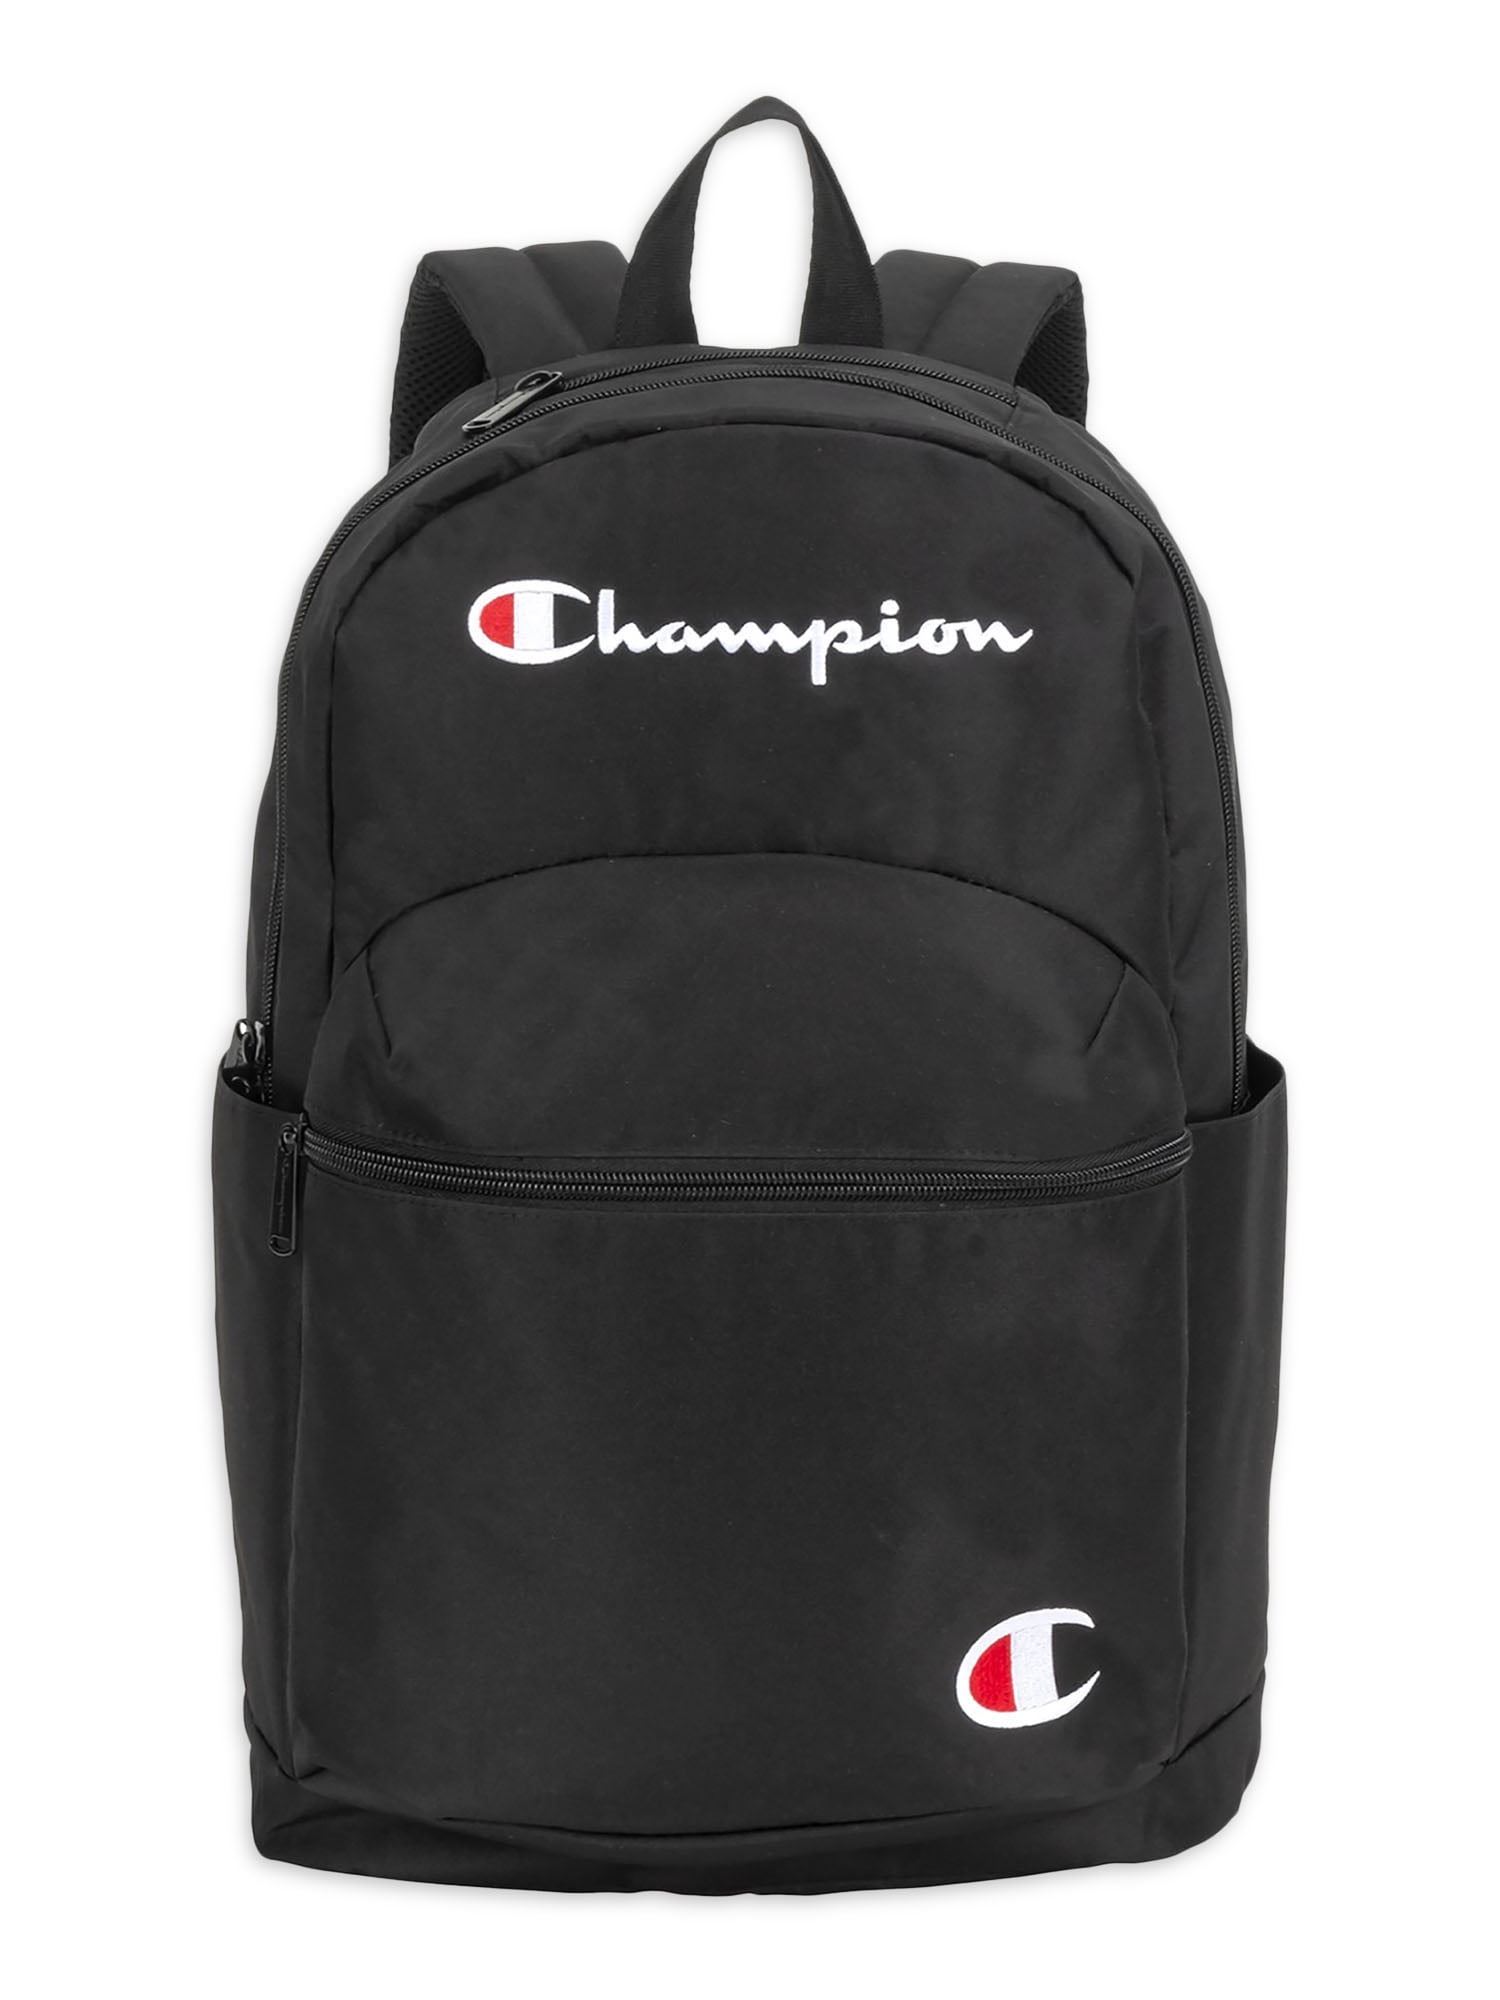 Champion Black Script Backpack - Walmart.com